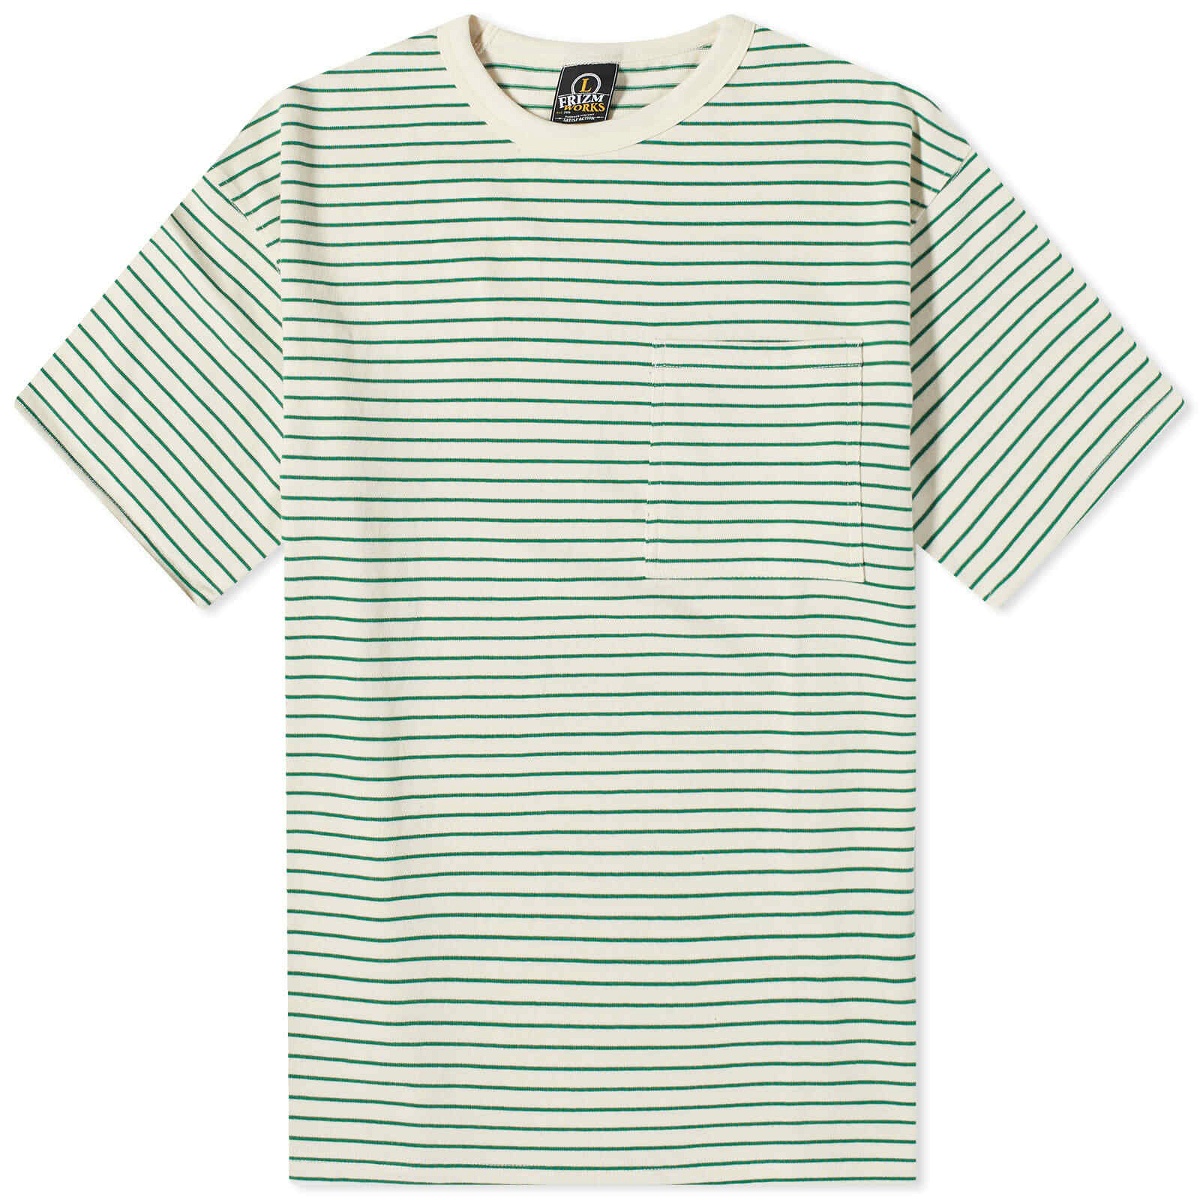 Photo: FrizmWORKS Men's Space Stripe T-Shirt in Ivory/Green